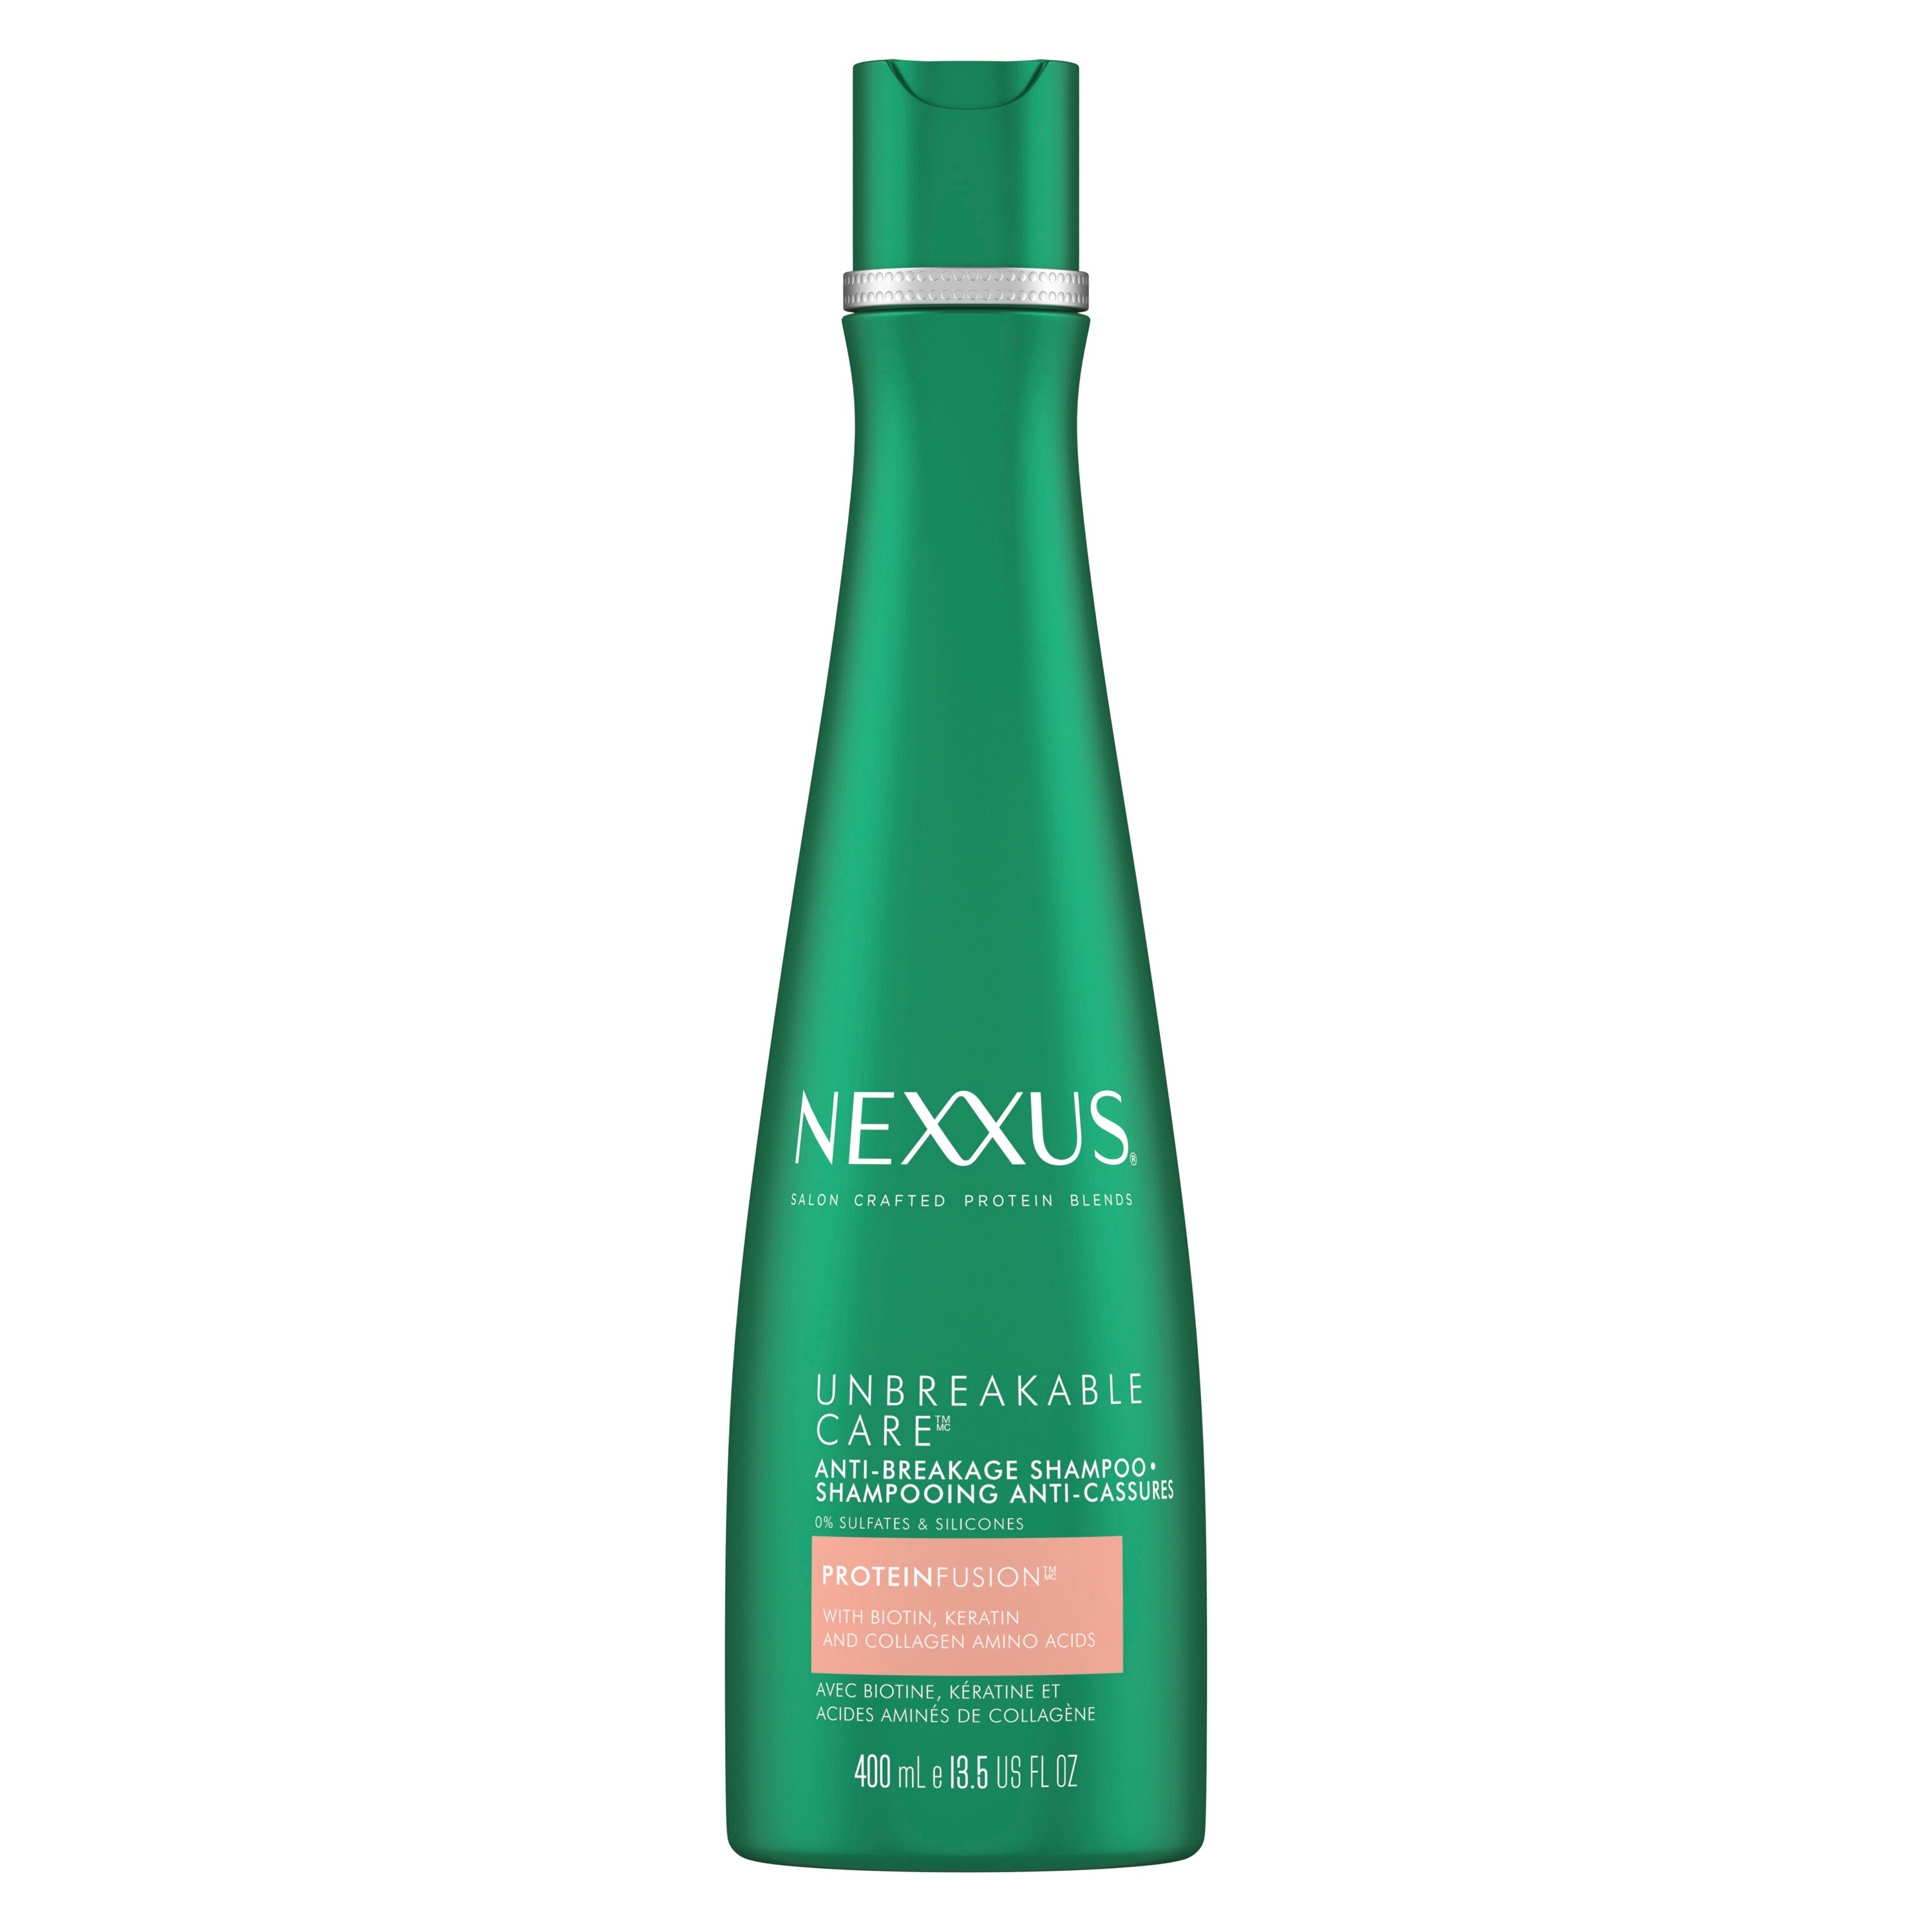 Nexxus Unbreakable Care Anti-Breakage Shampoo, 13.5 oz